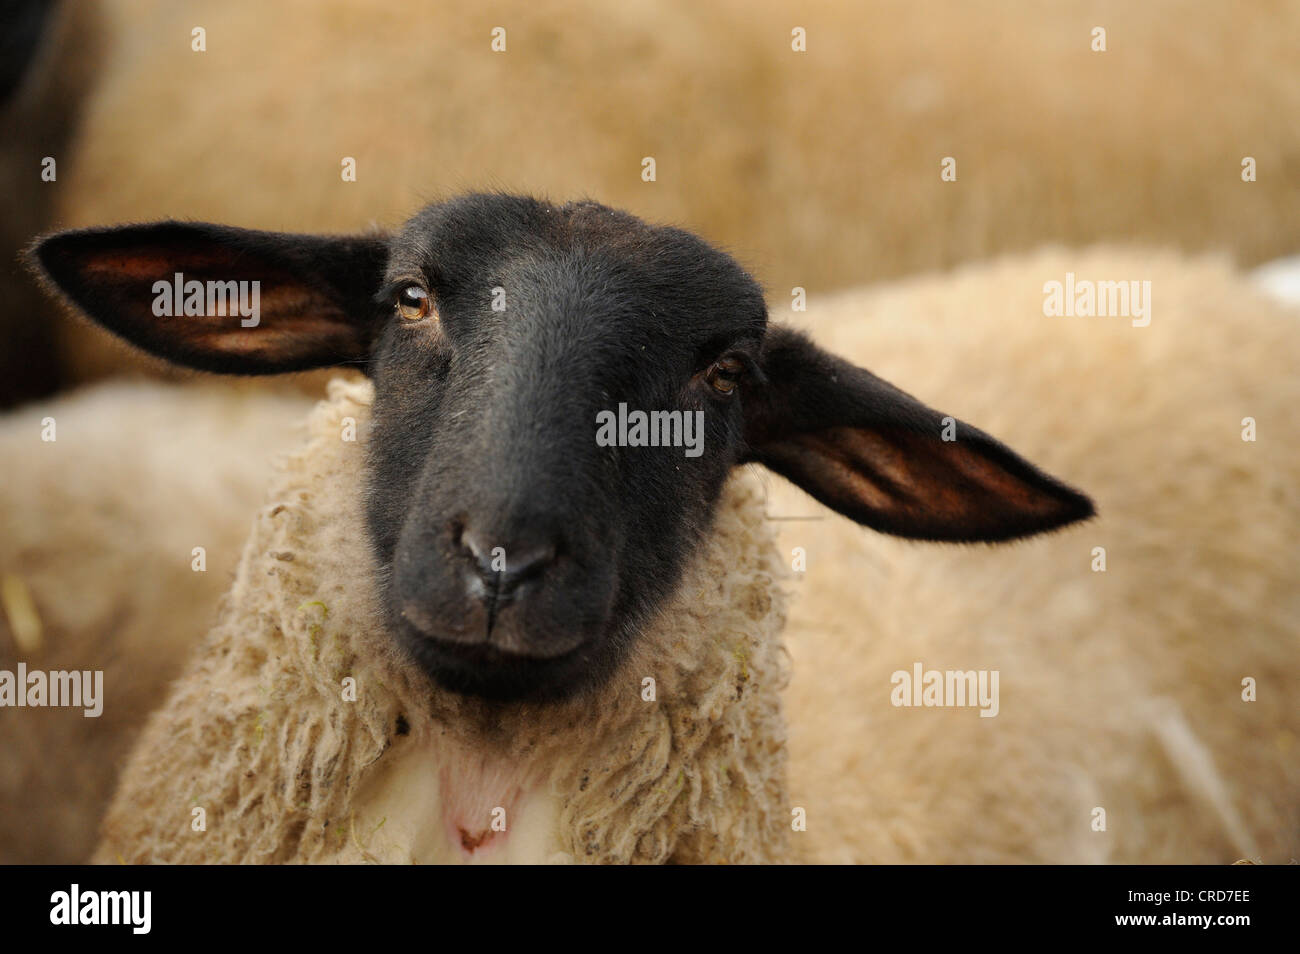 Suffolk sheep, portrait Stock Photo